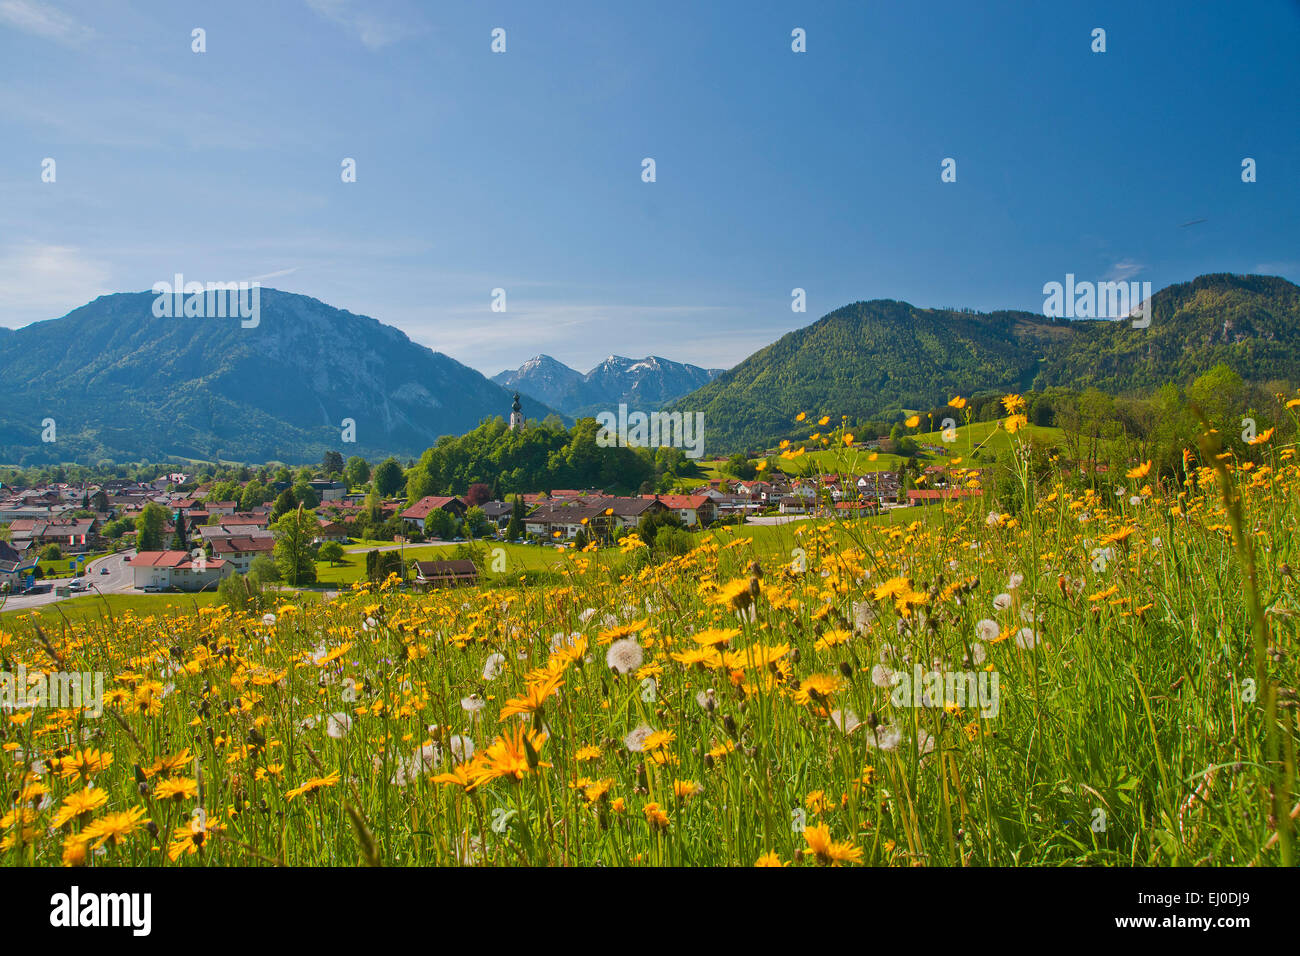 Europa, Deutschland, Bayern, Bayern, Oberbayern, Ruhpolding, Chiemgau, Panorama, Berge, Alpen, Berge, Blumen, Wiese, Stockfoto